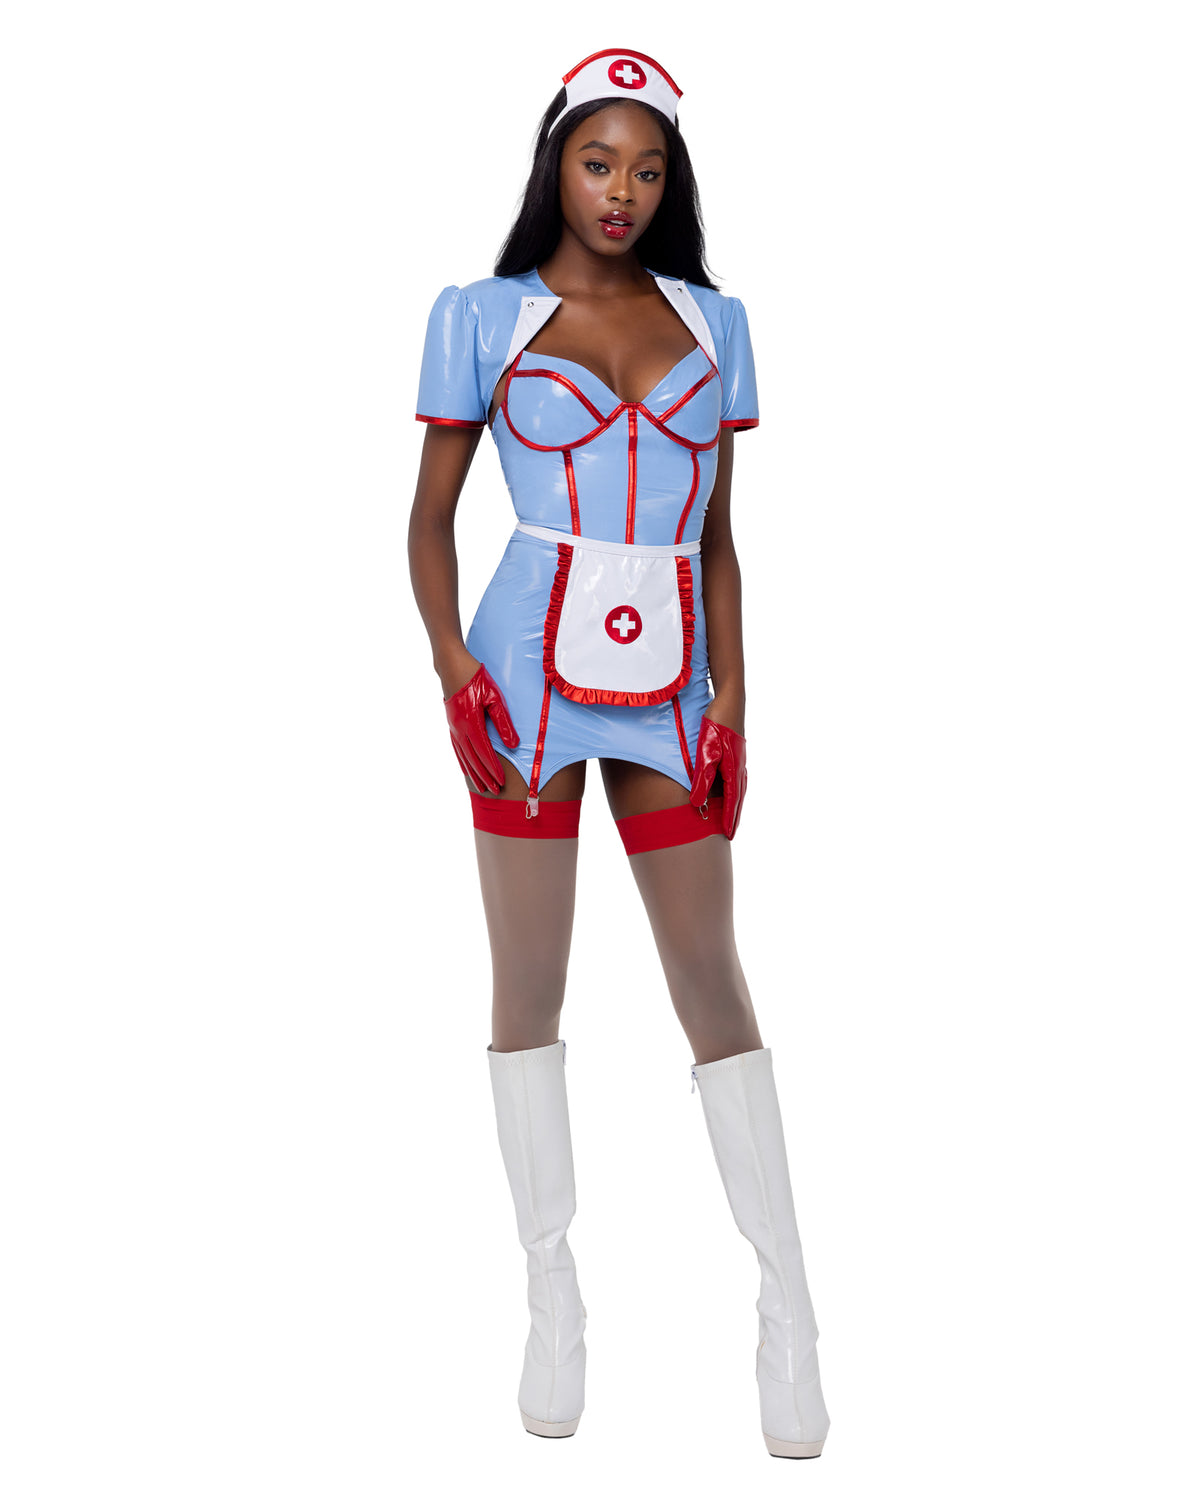 Sexy Retro Nurse Blue Shiny Adult Costume